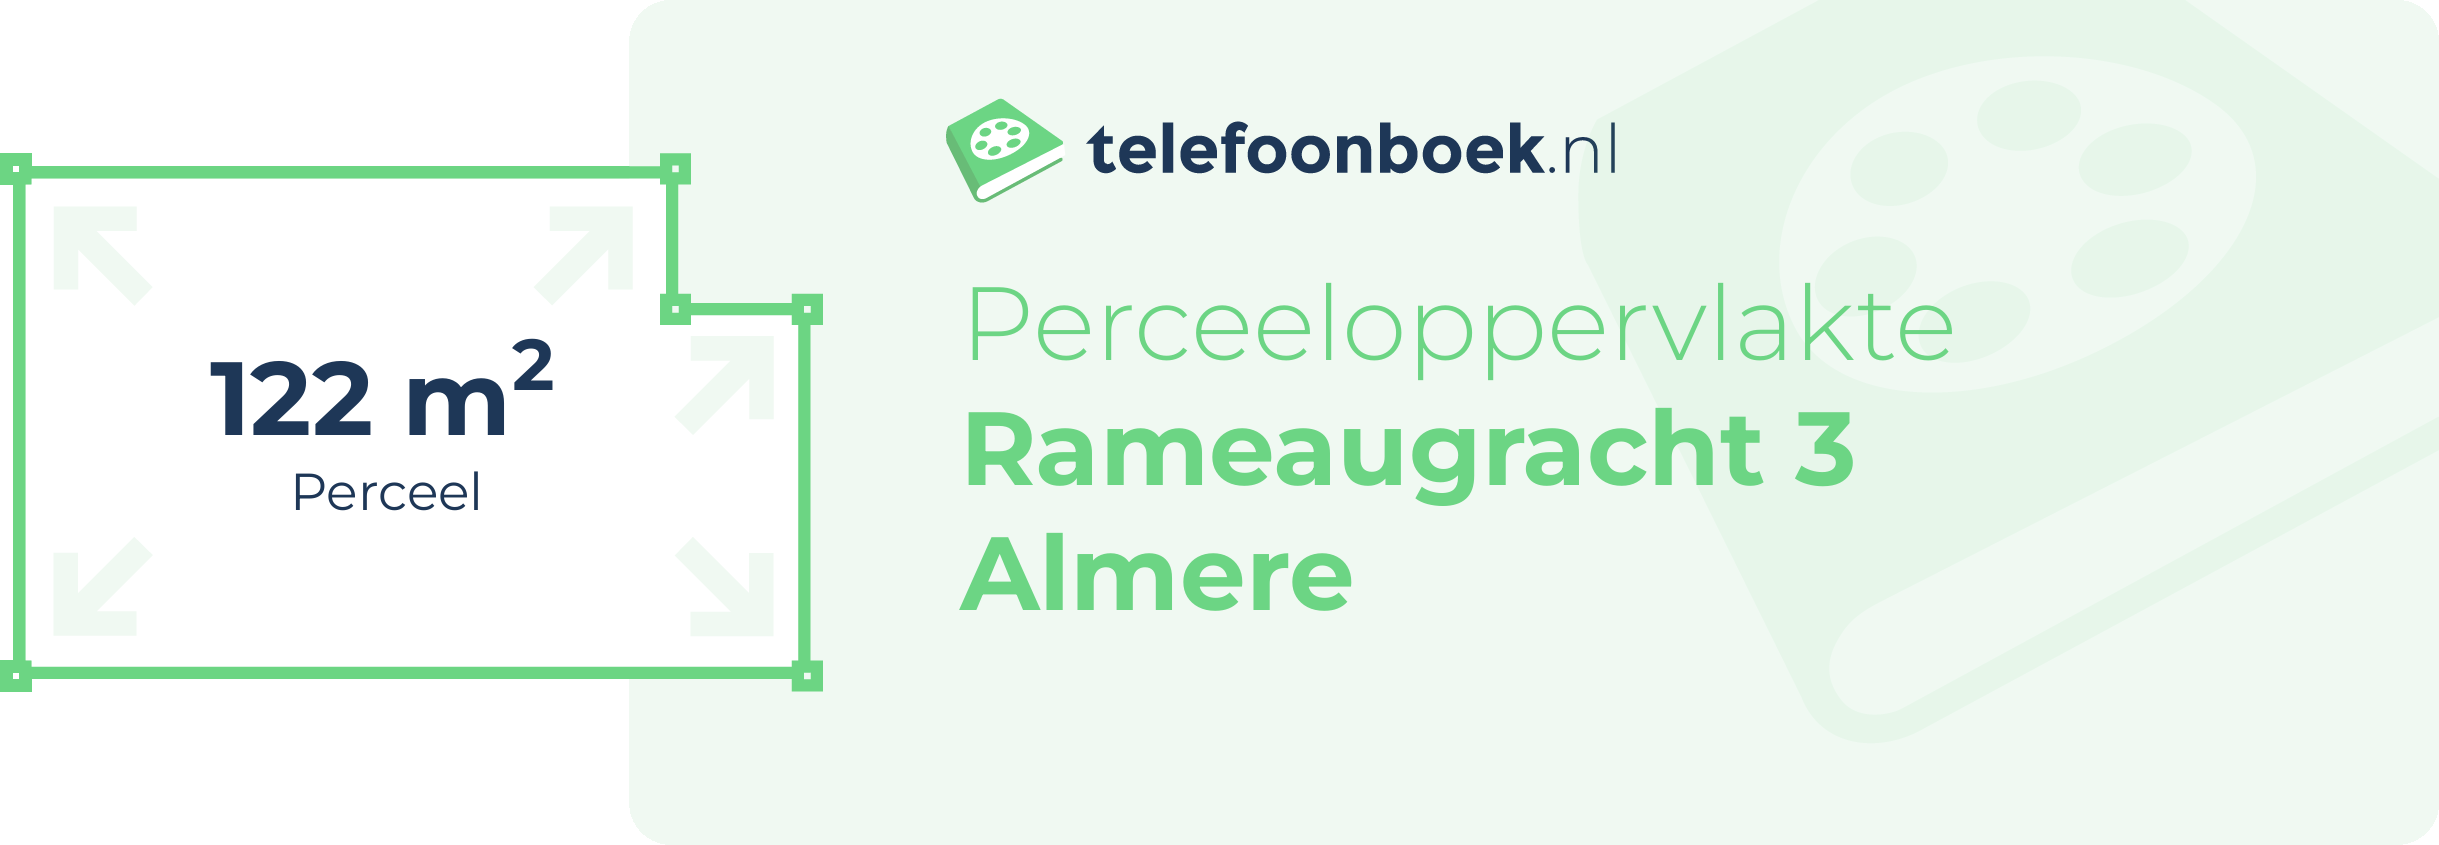 Perceeloppervlakte Rameaugracht 3 Almere